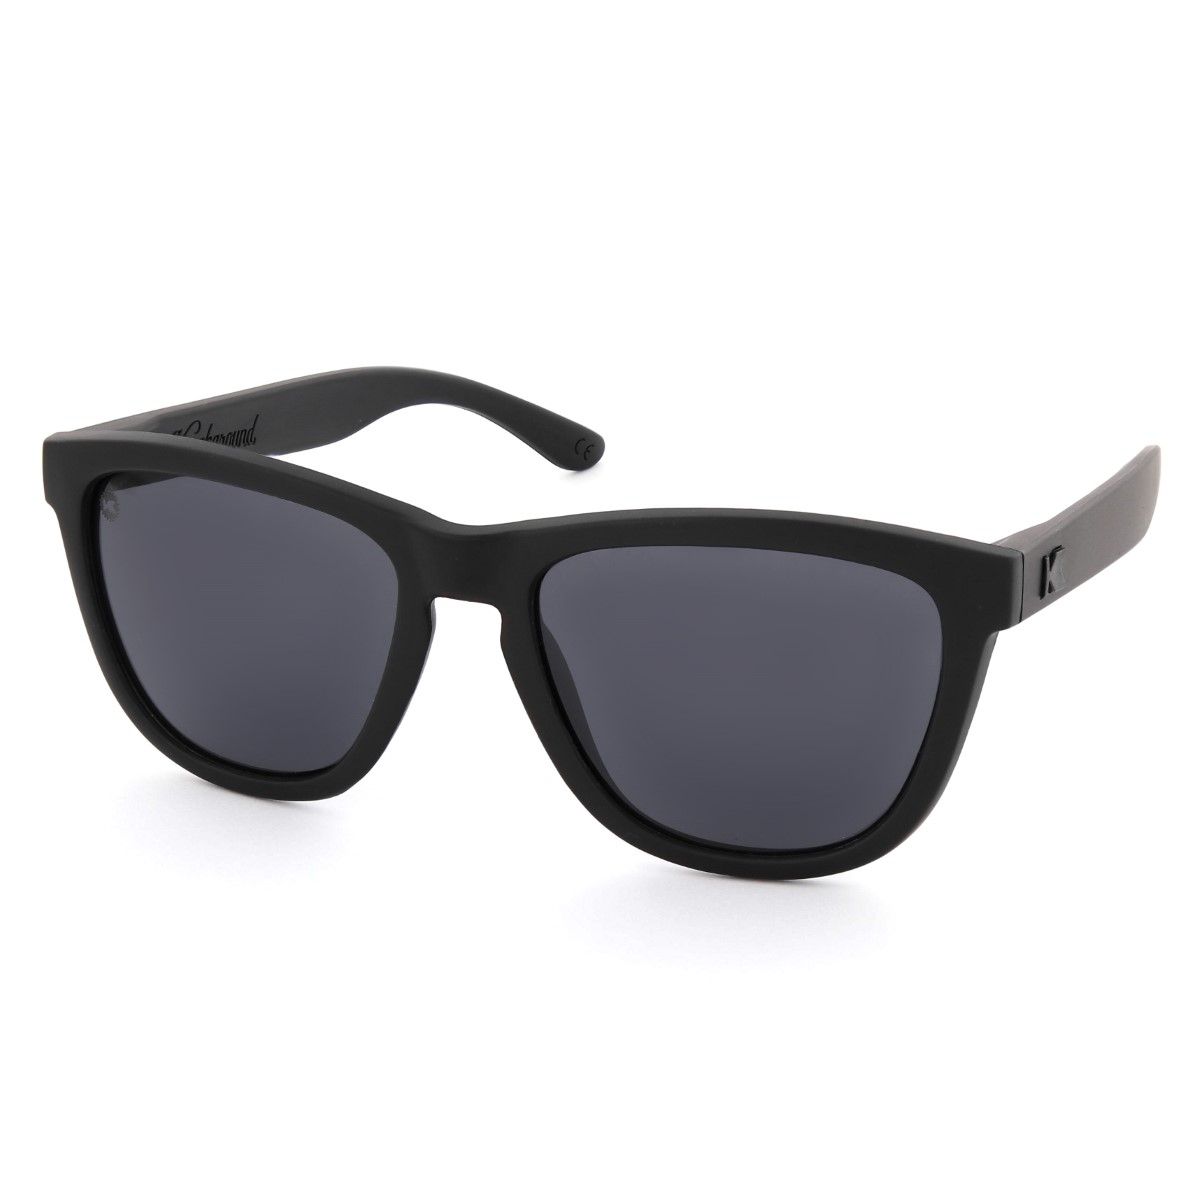 Knockaround Black On Black/Polarized Smoke Premiums Unisex Sunglasses